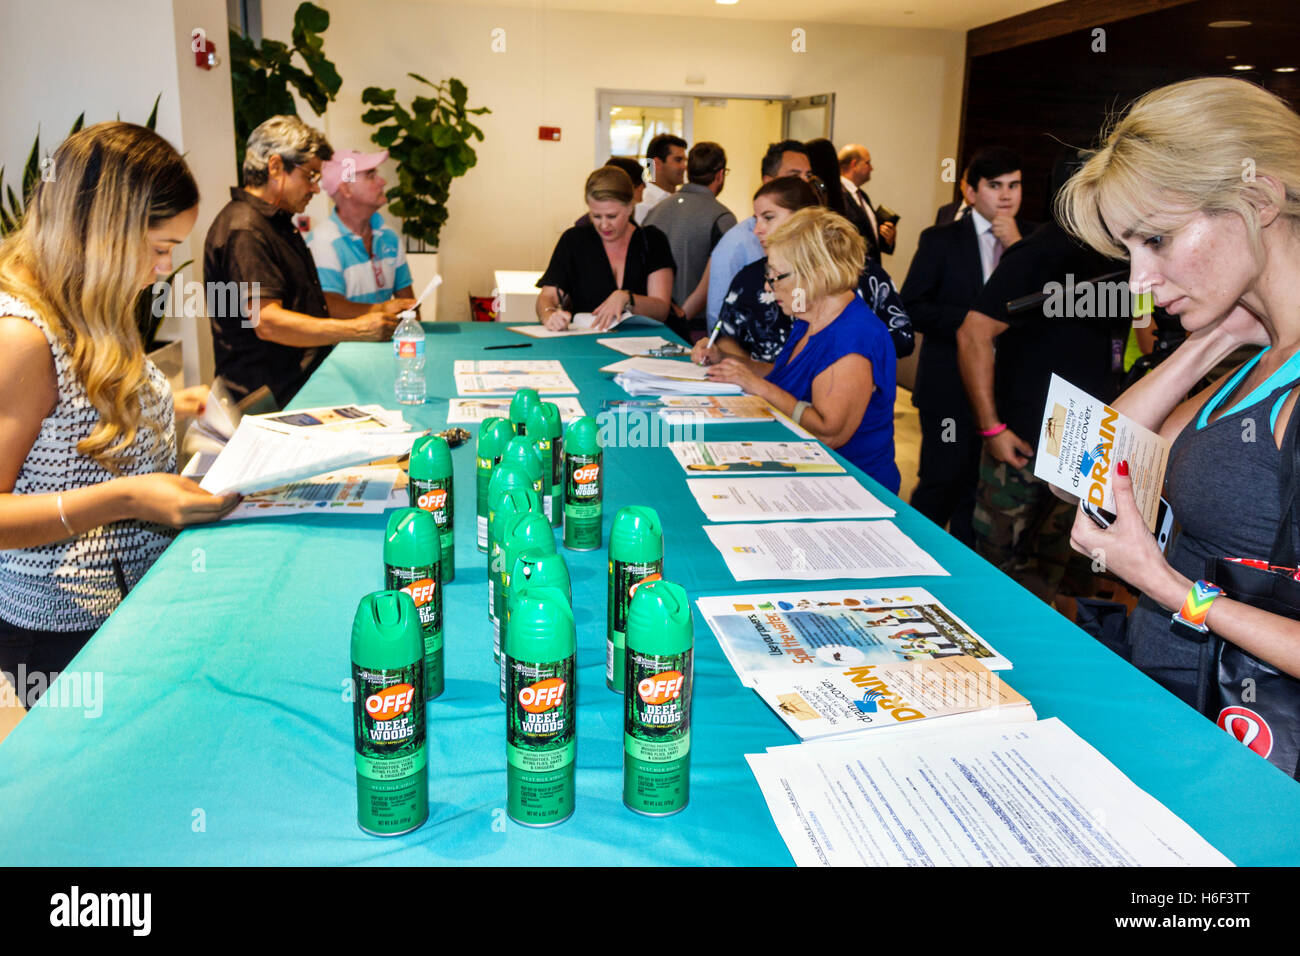 Miami Beach Florida,Waverly Condominiums,Zika Virus Town Hall Meeting,free mosquito spray,OFF!,information,literature,advice,adult adults,woman female Stock Photo